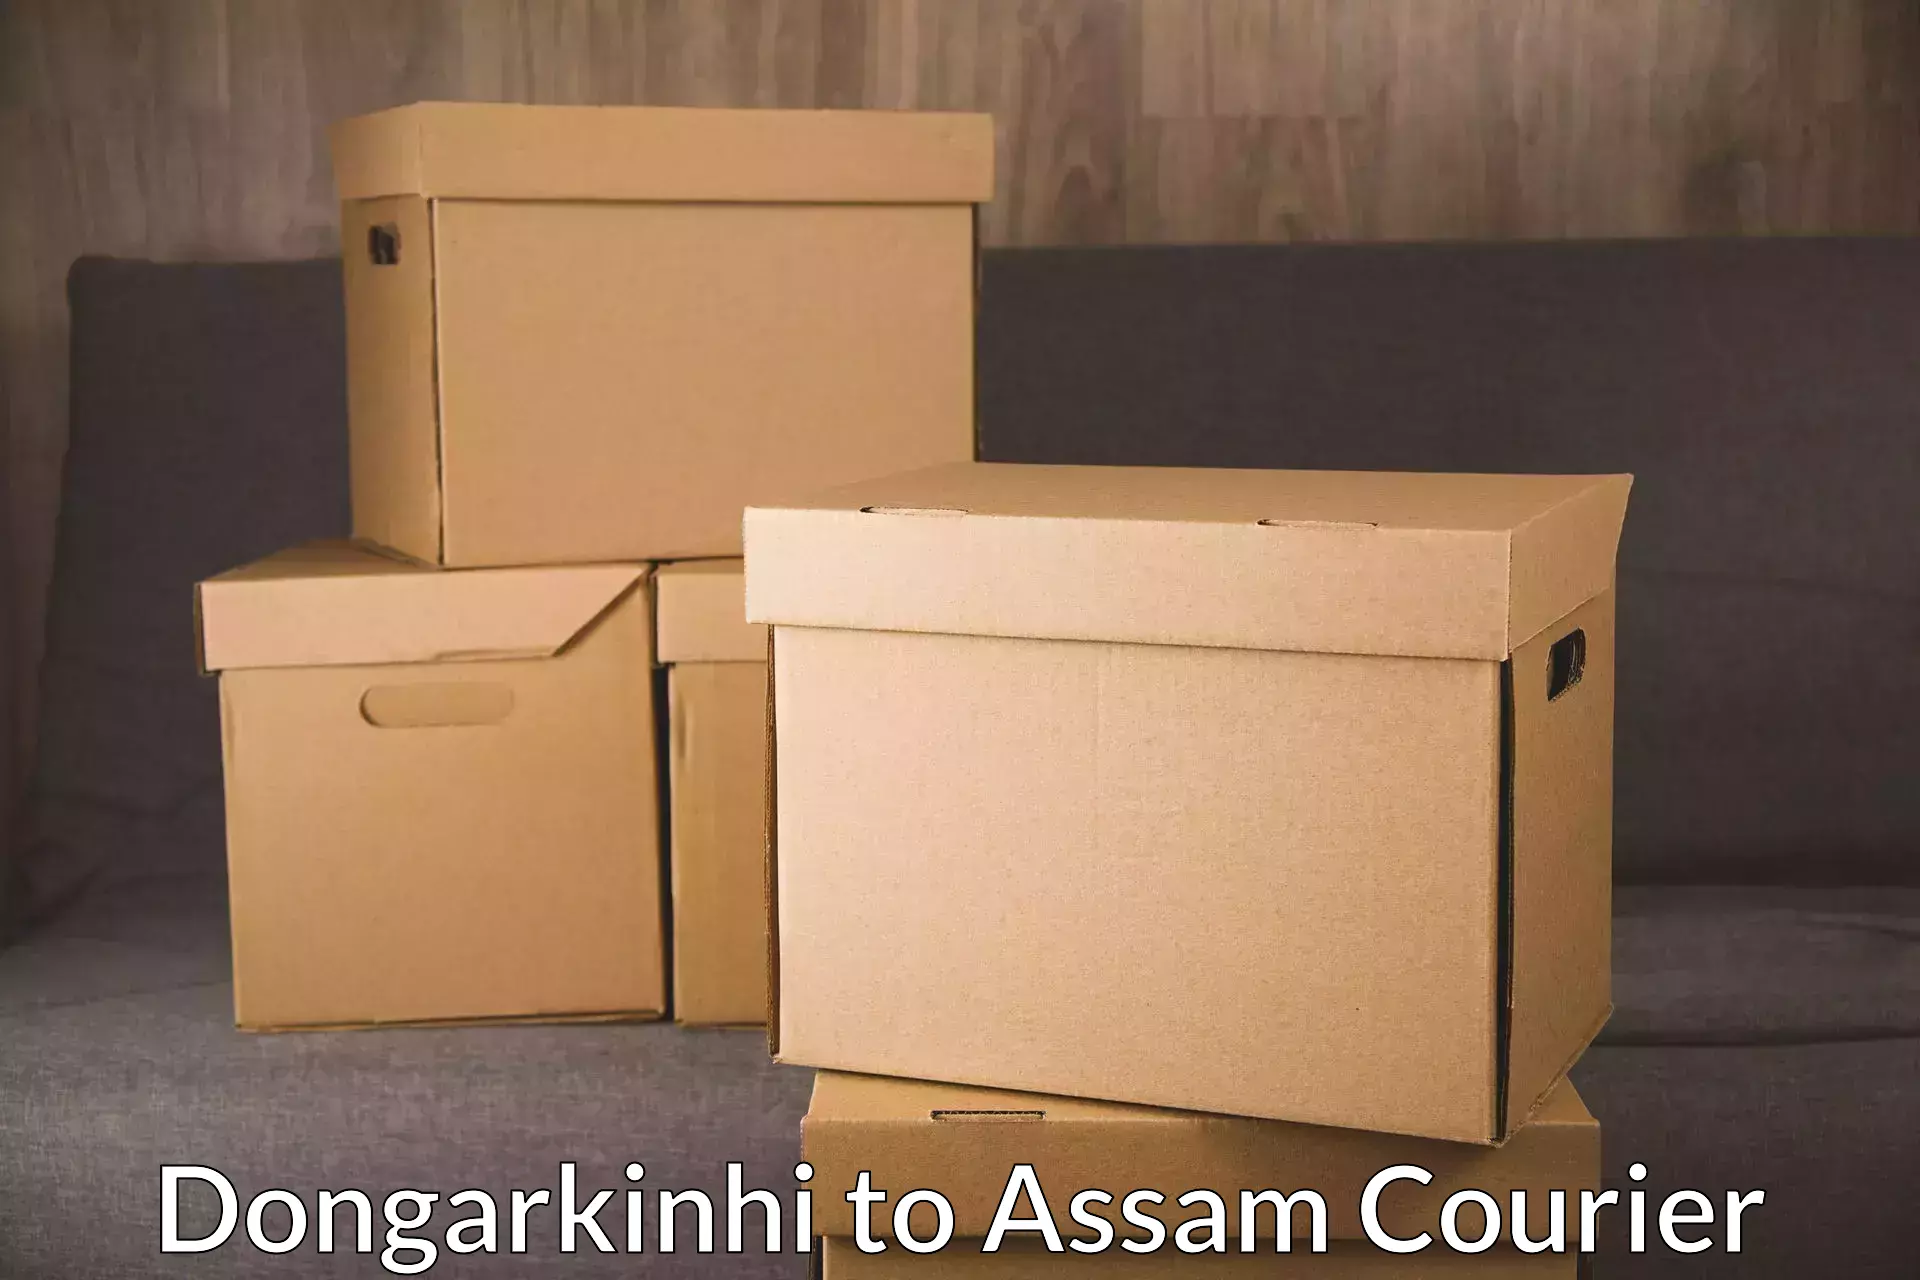 Express logistics providers Dongarkinhi to Assam